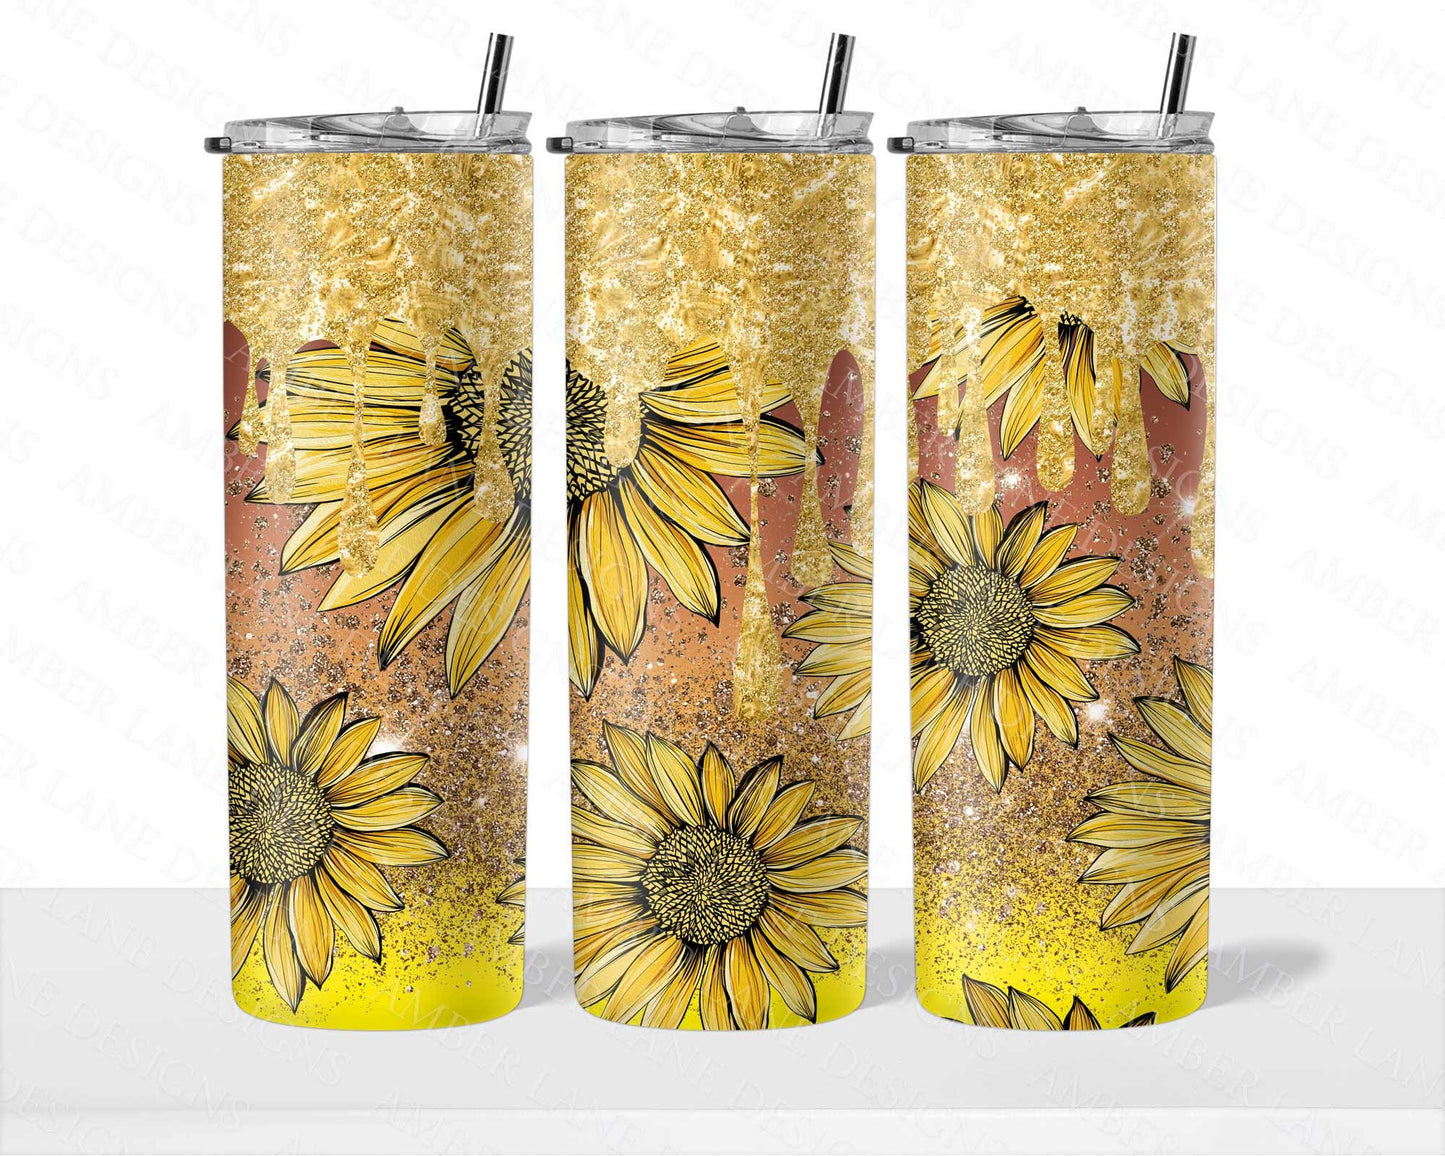 Sunflower Serenity: 20oz Skinny Tumbler in Straight Elegance Golden Bloom Bliss Harvest Sunshine Petals and Sips ields of Gold 1 jpeg file